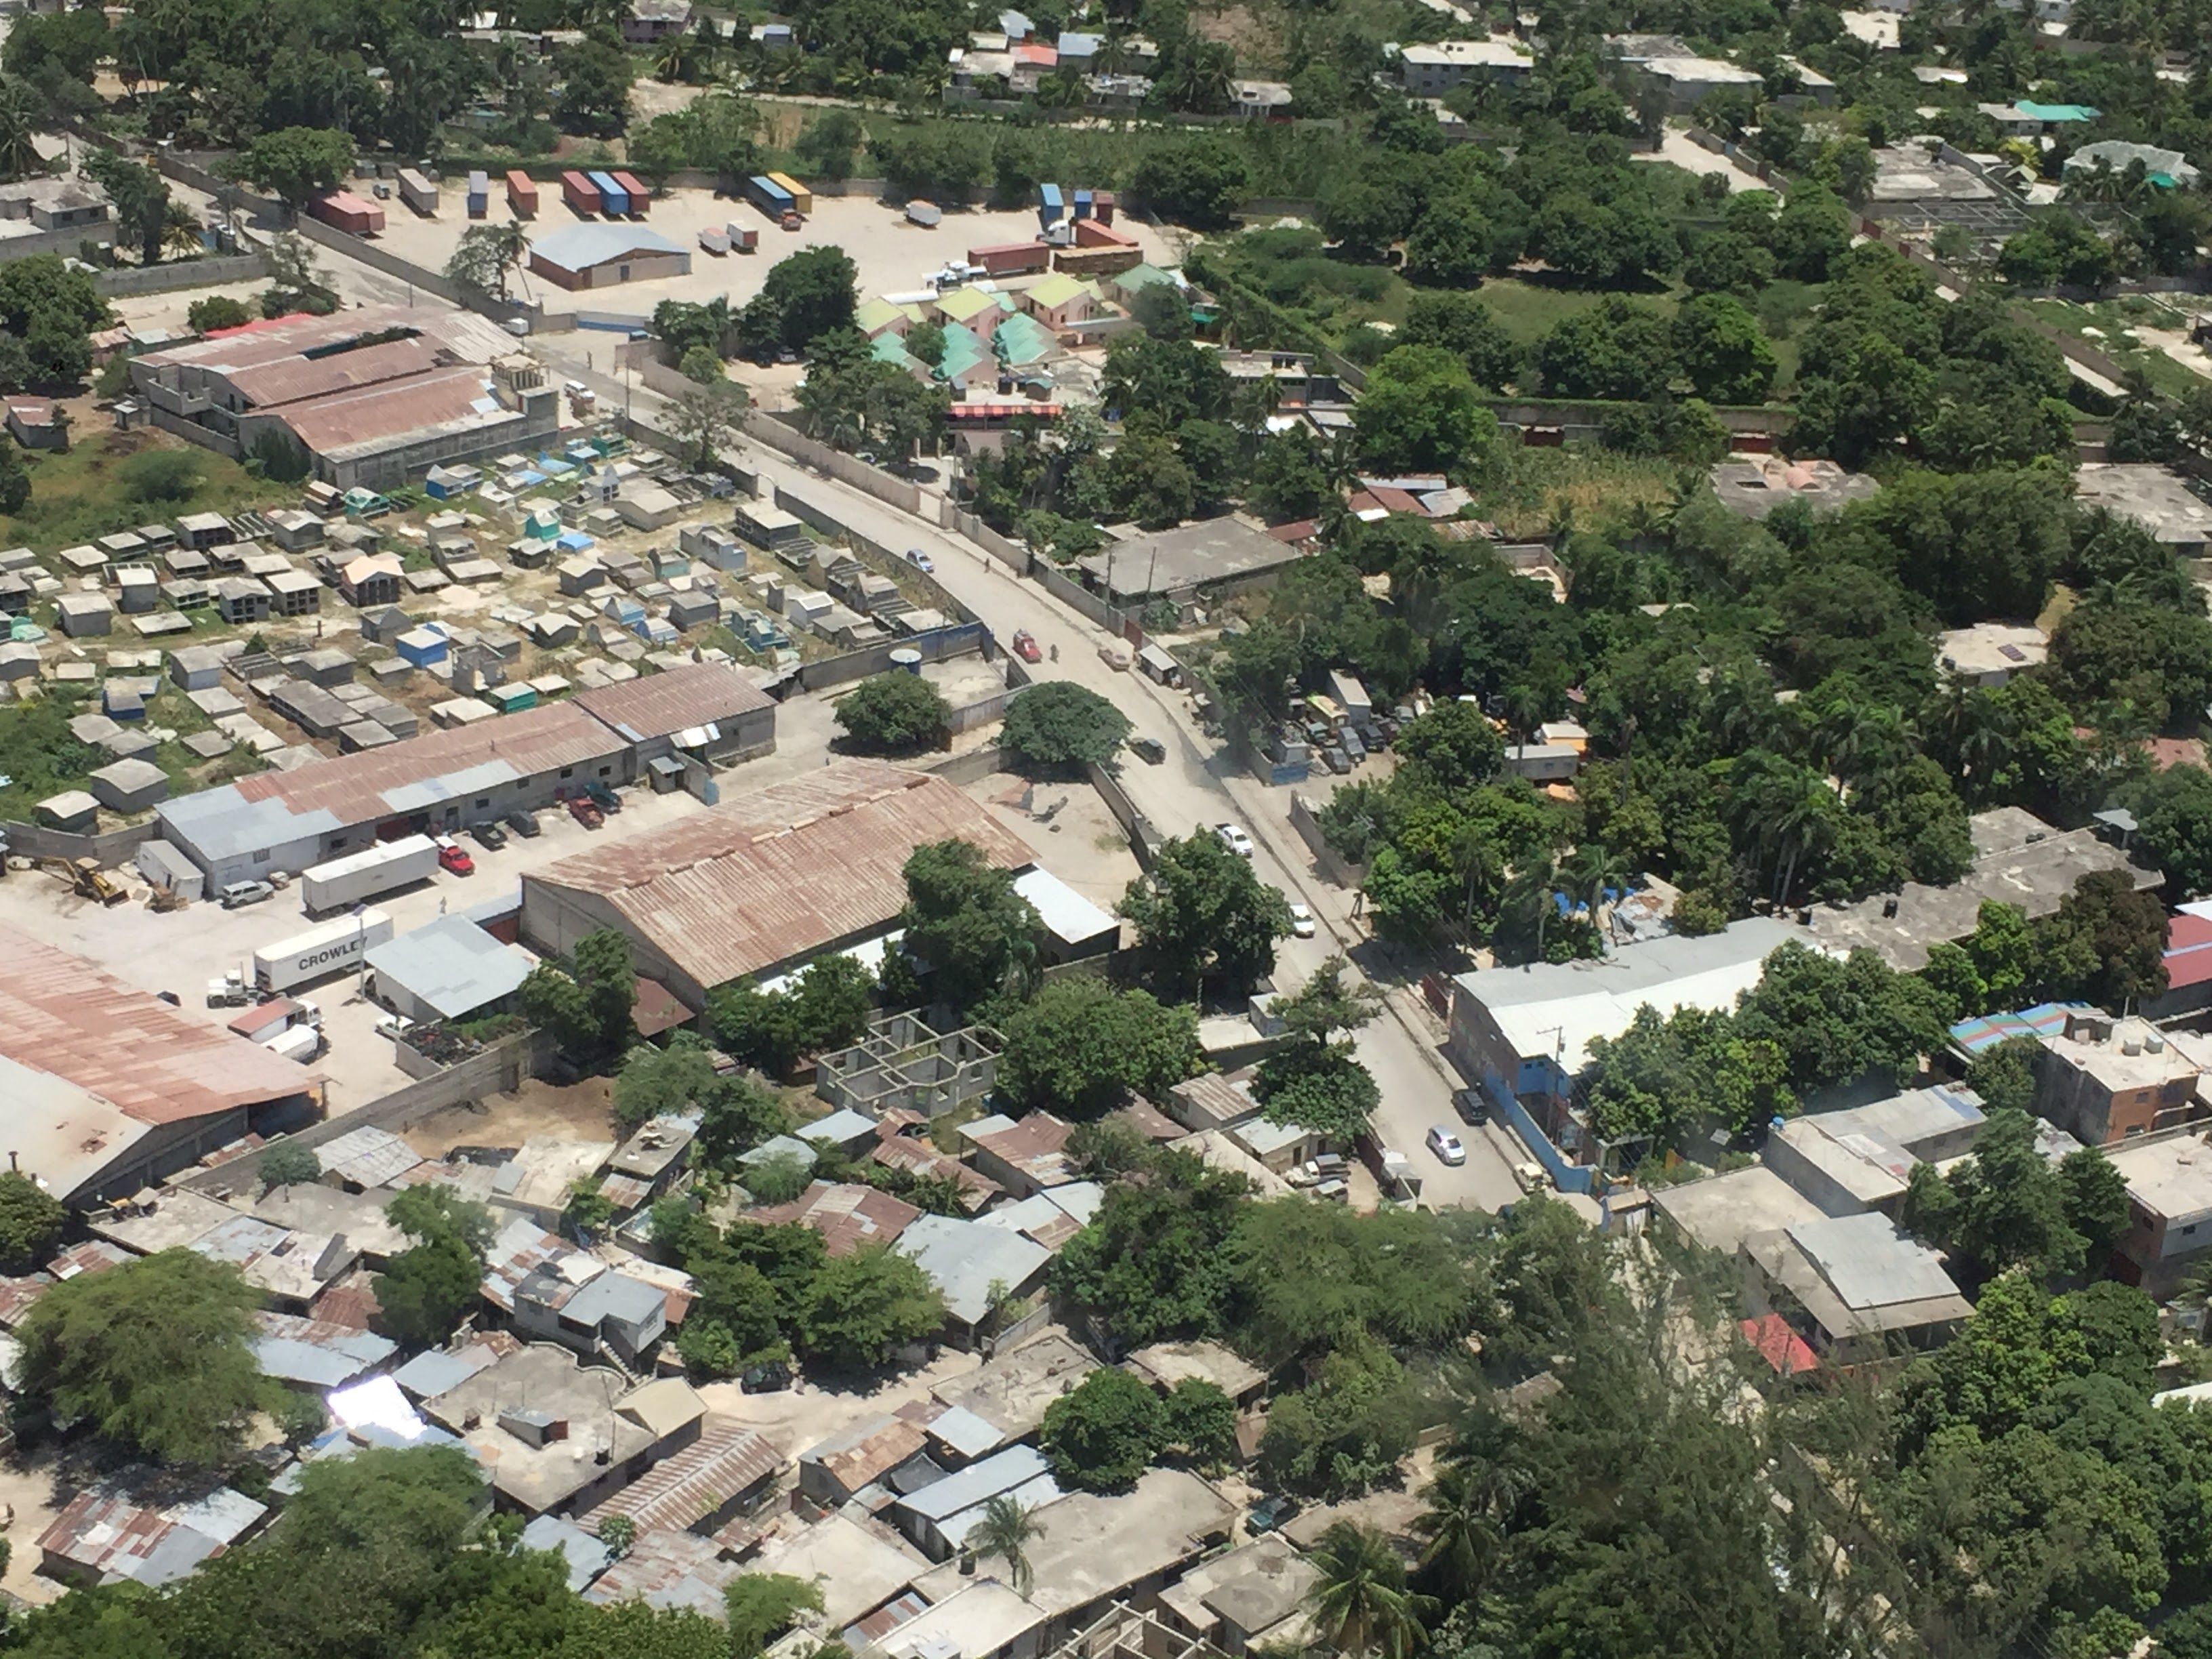 Understanding Unrest Spreading from Haiti’s Capital